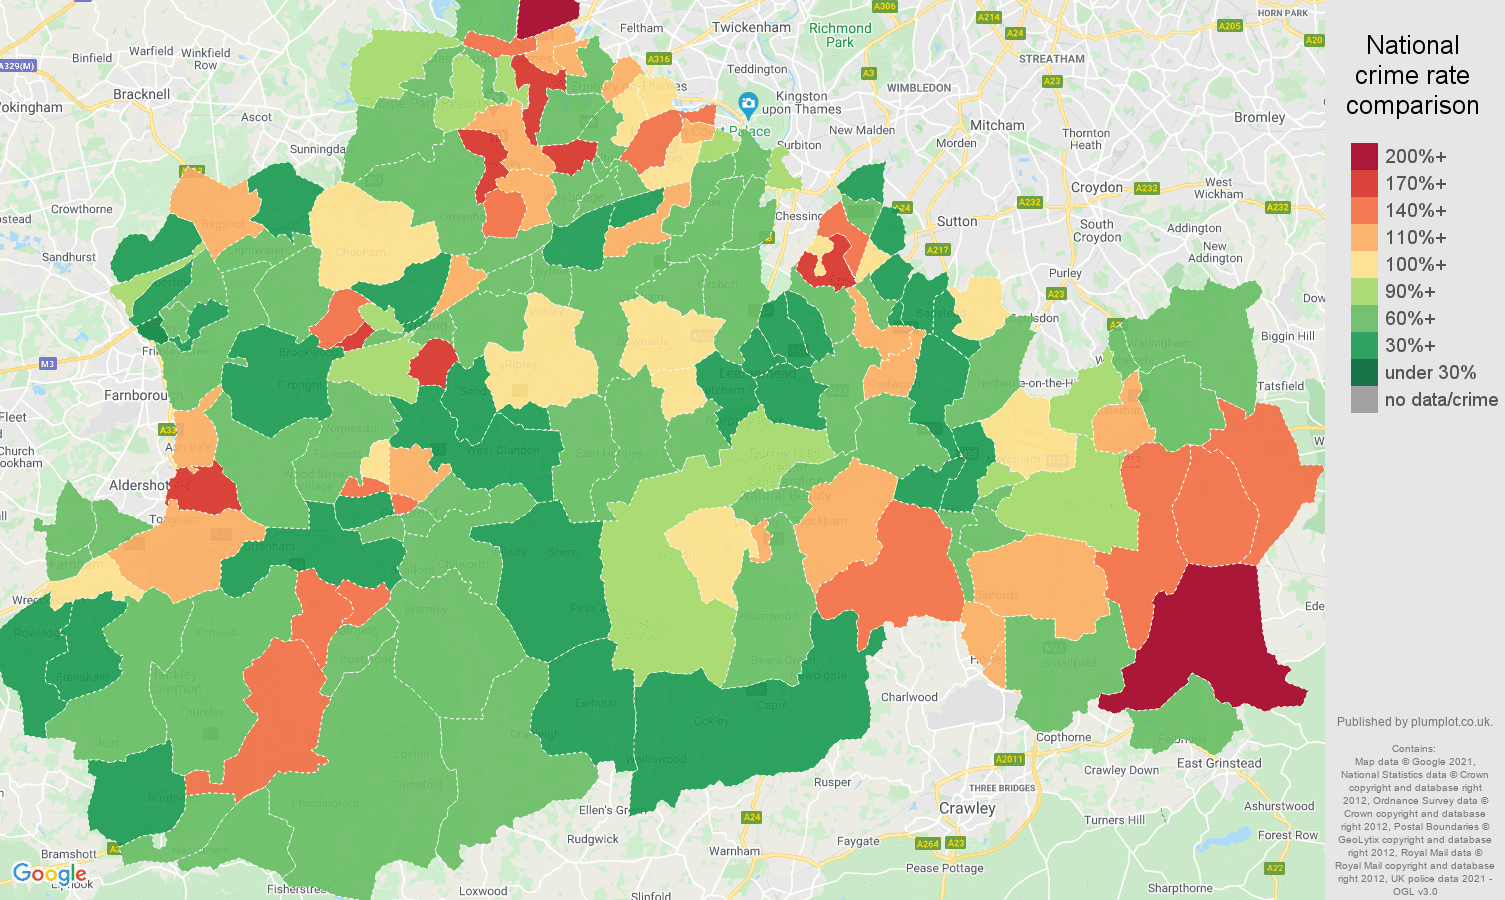 Surrey criminal damage and arson crime rate comparison map